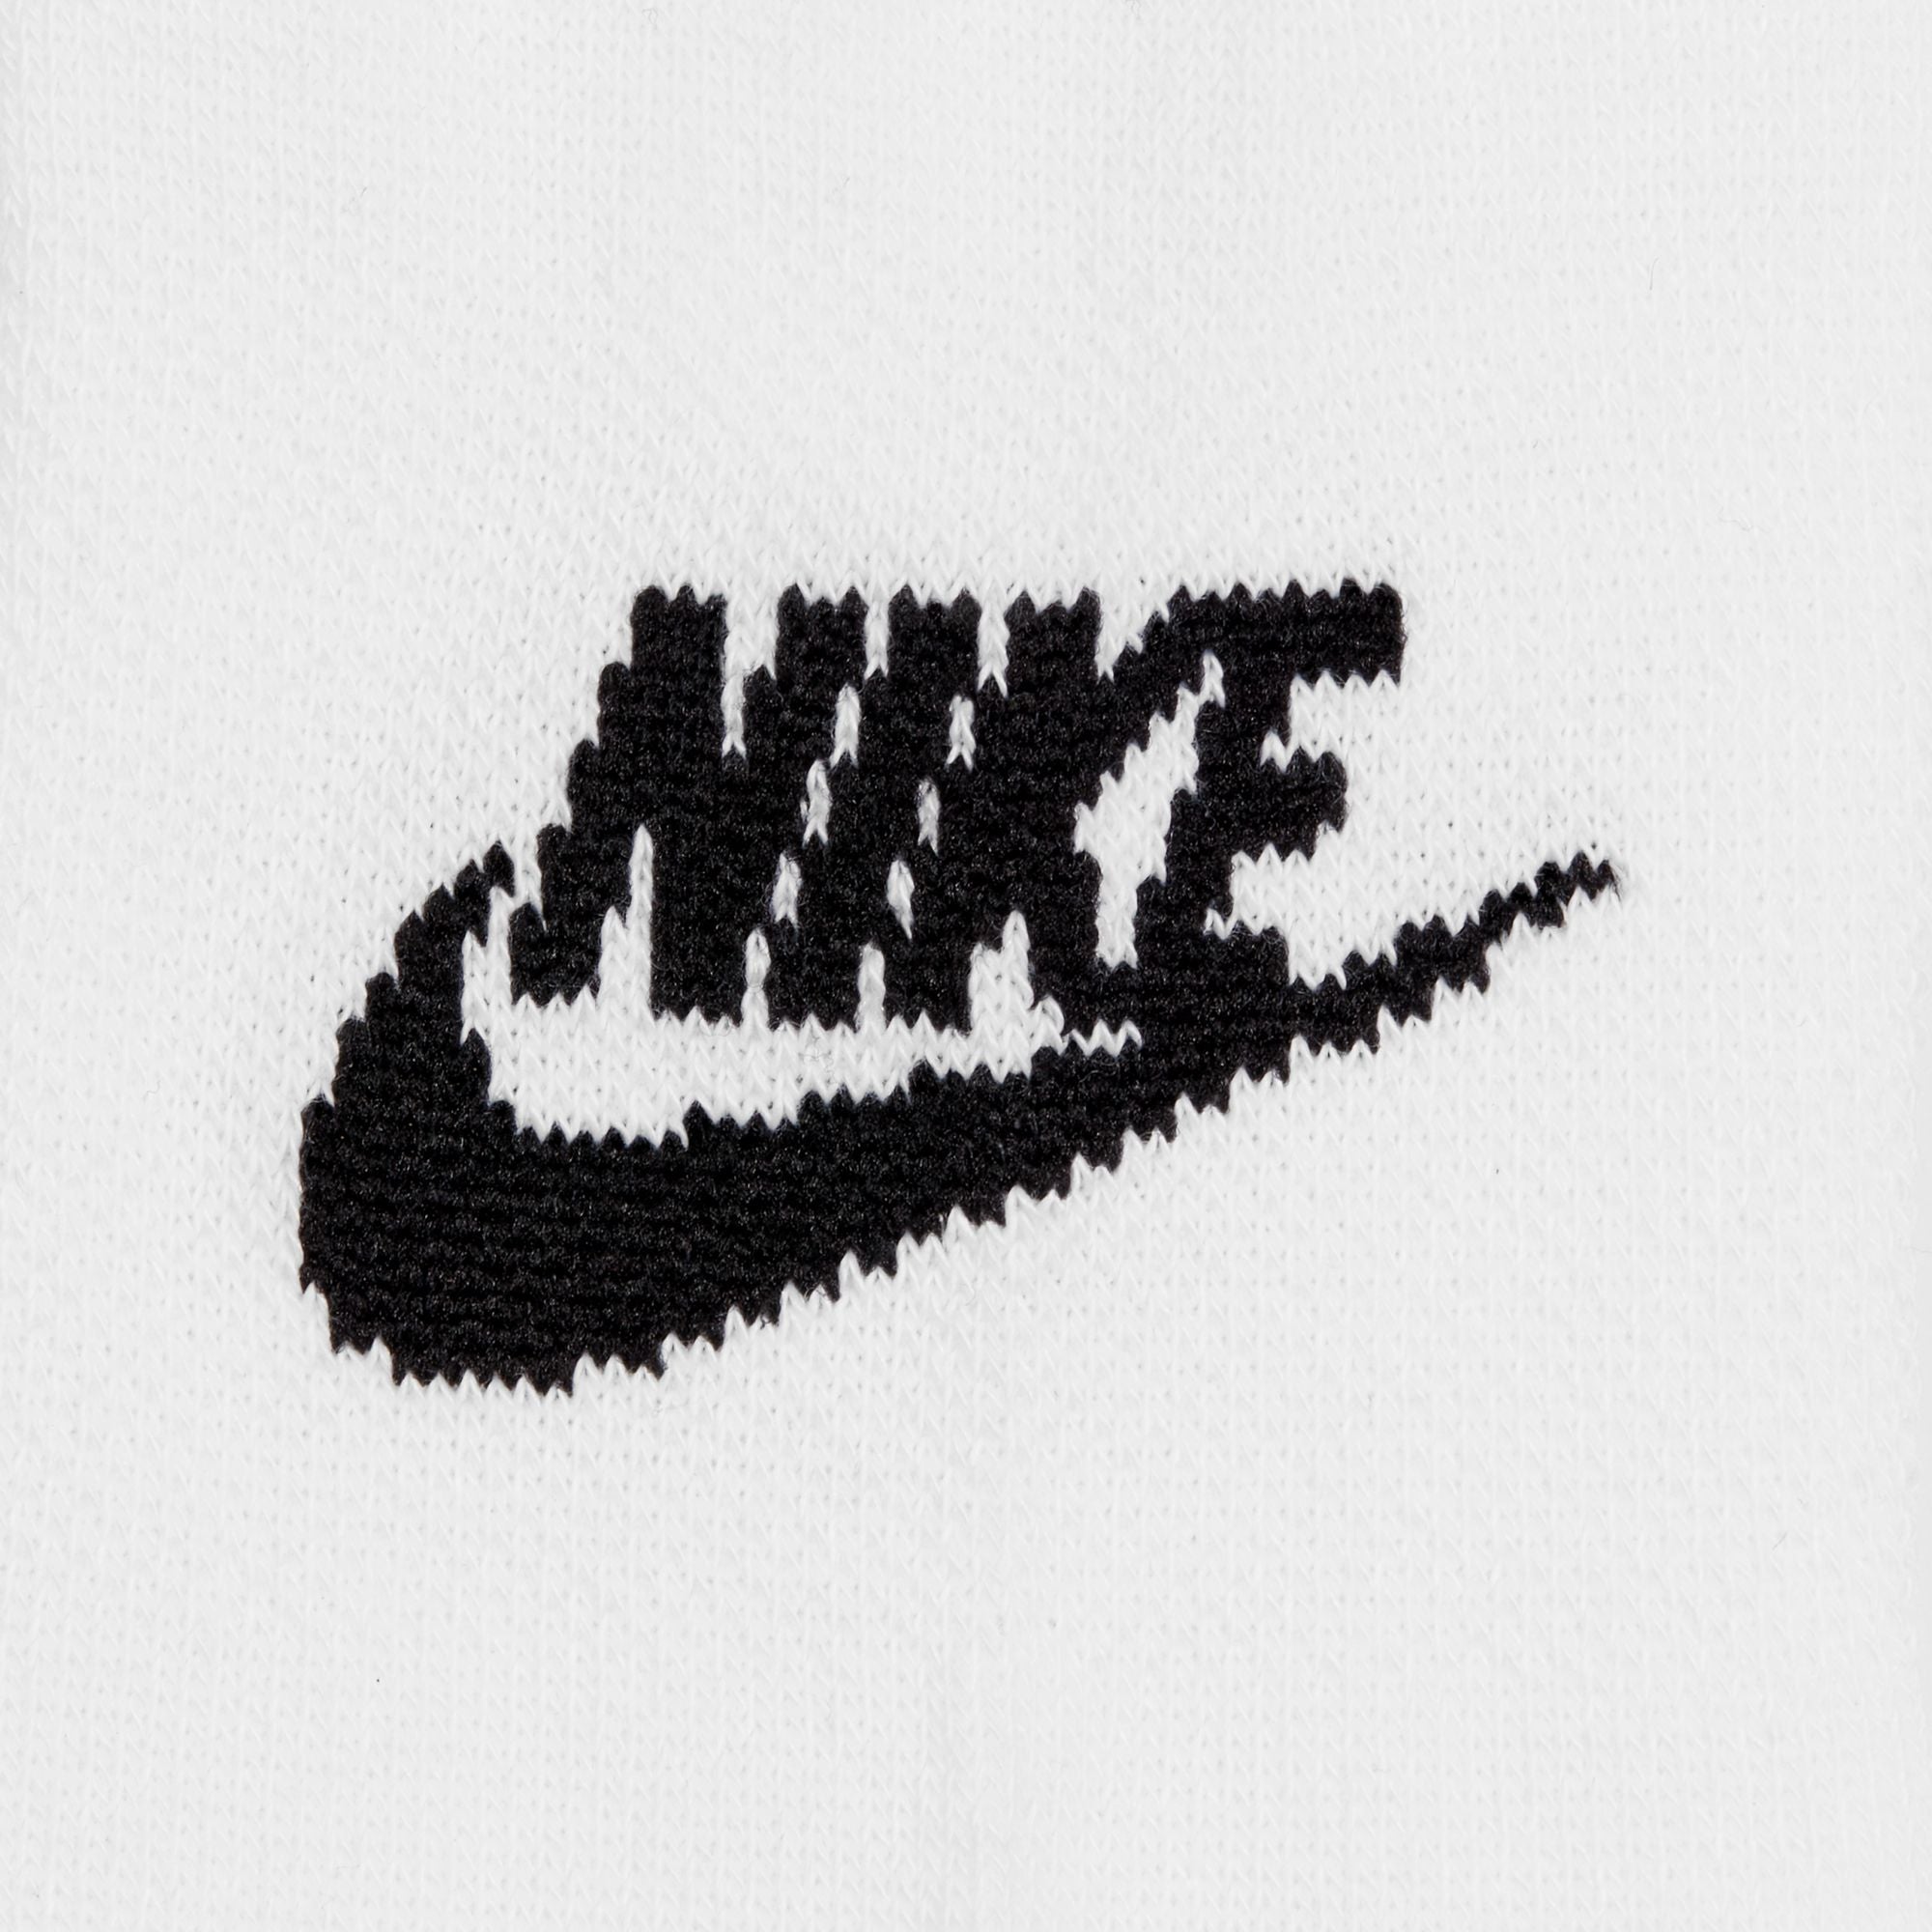 Nike Everyday Essential No Show 3 Pack Socks - White/Black